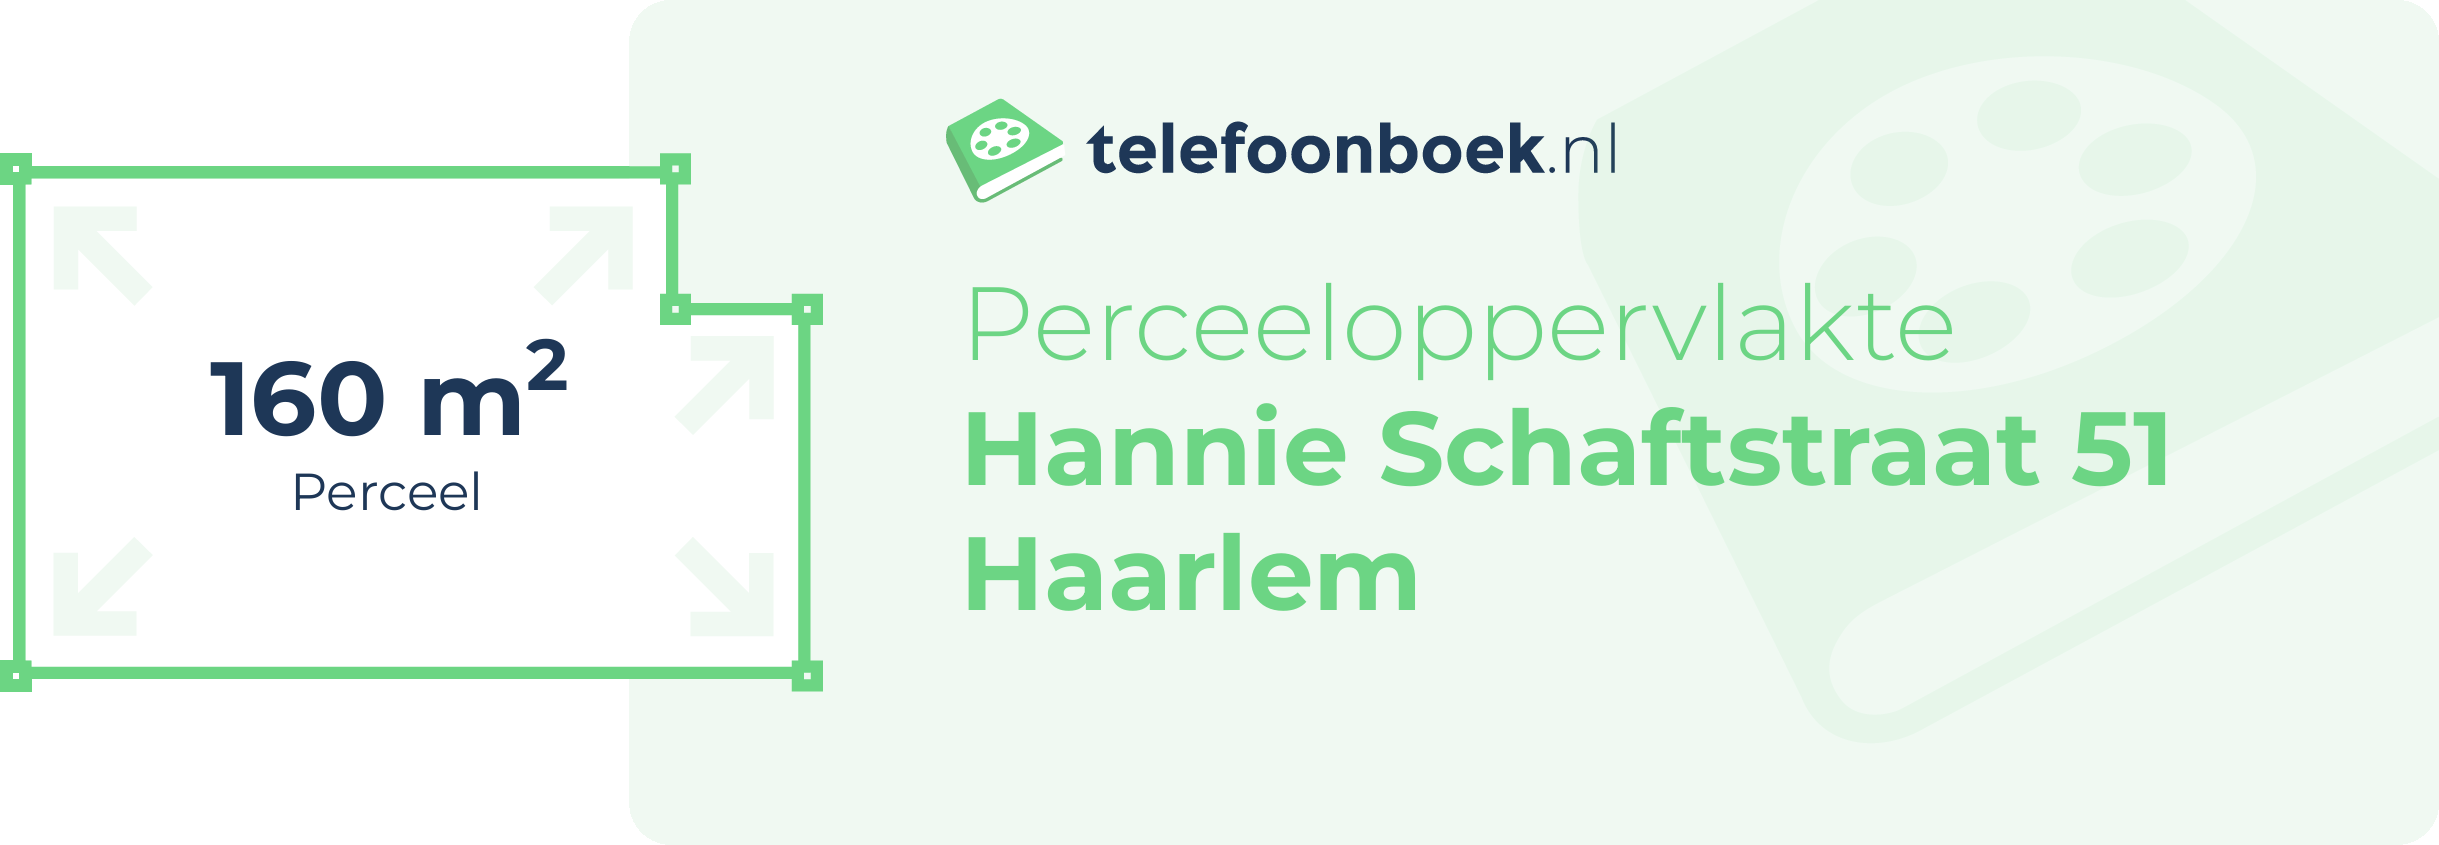 Perceeloppervlakte Hannie Schaftstraat 51 Haarlem